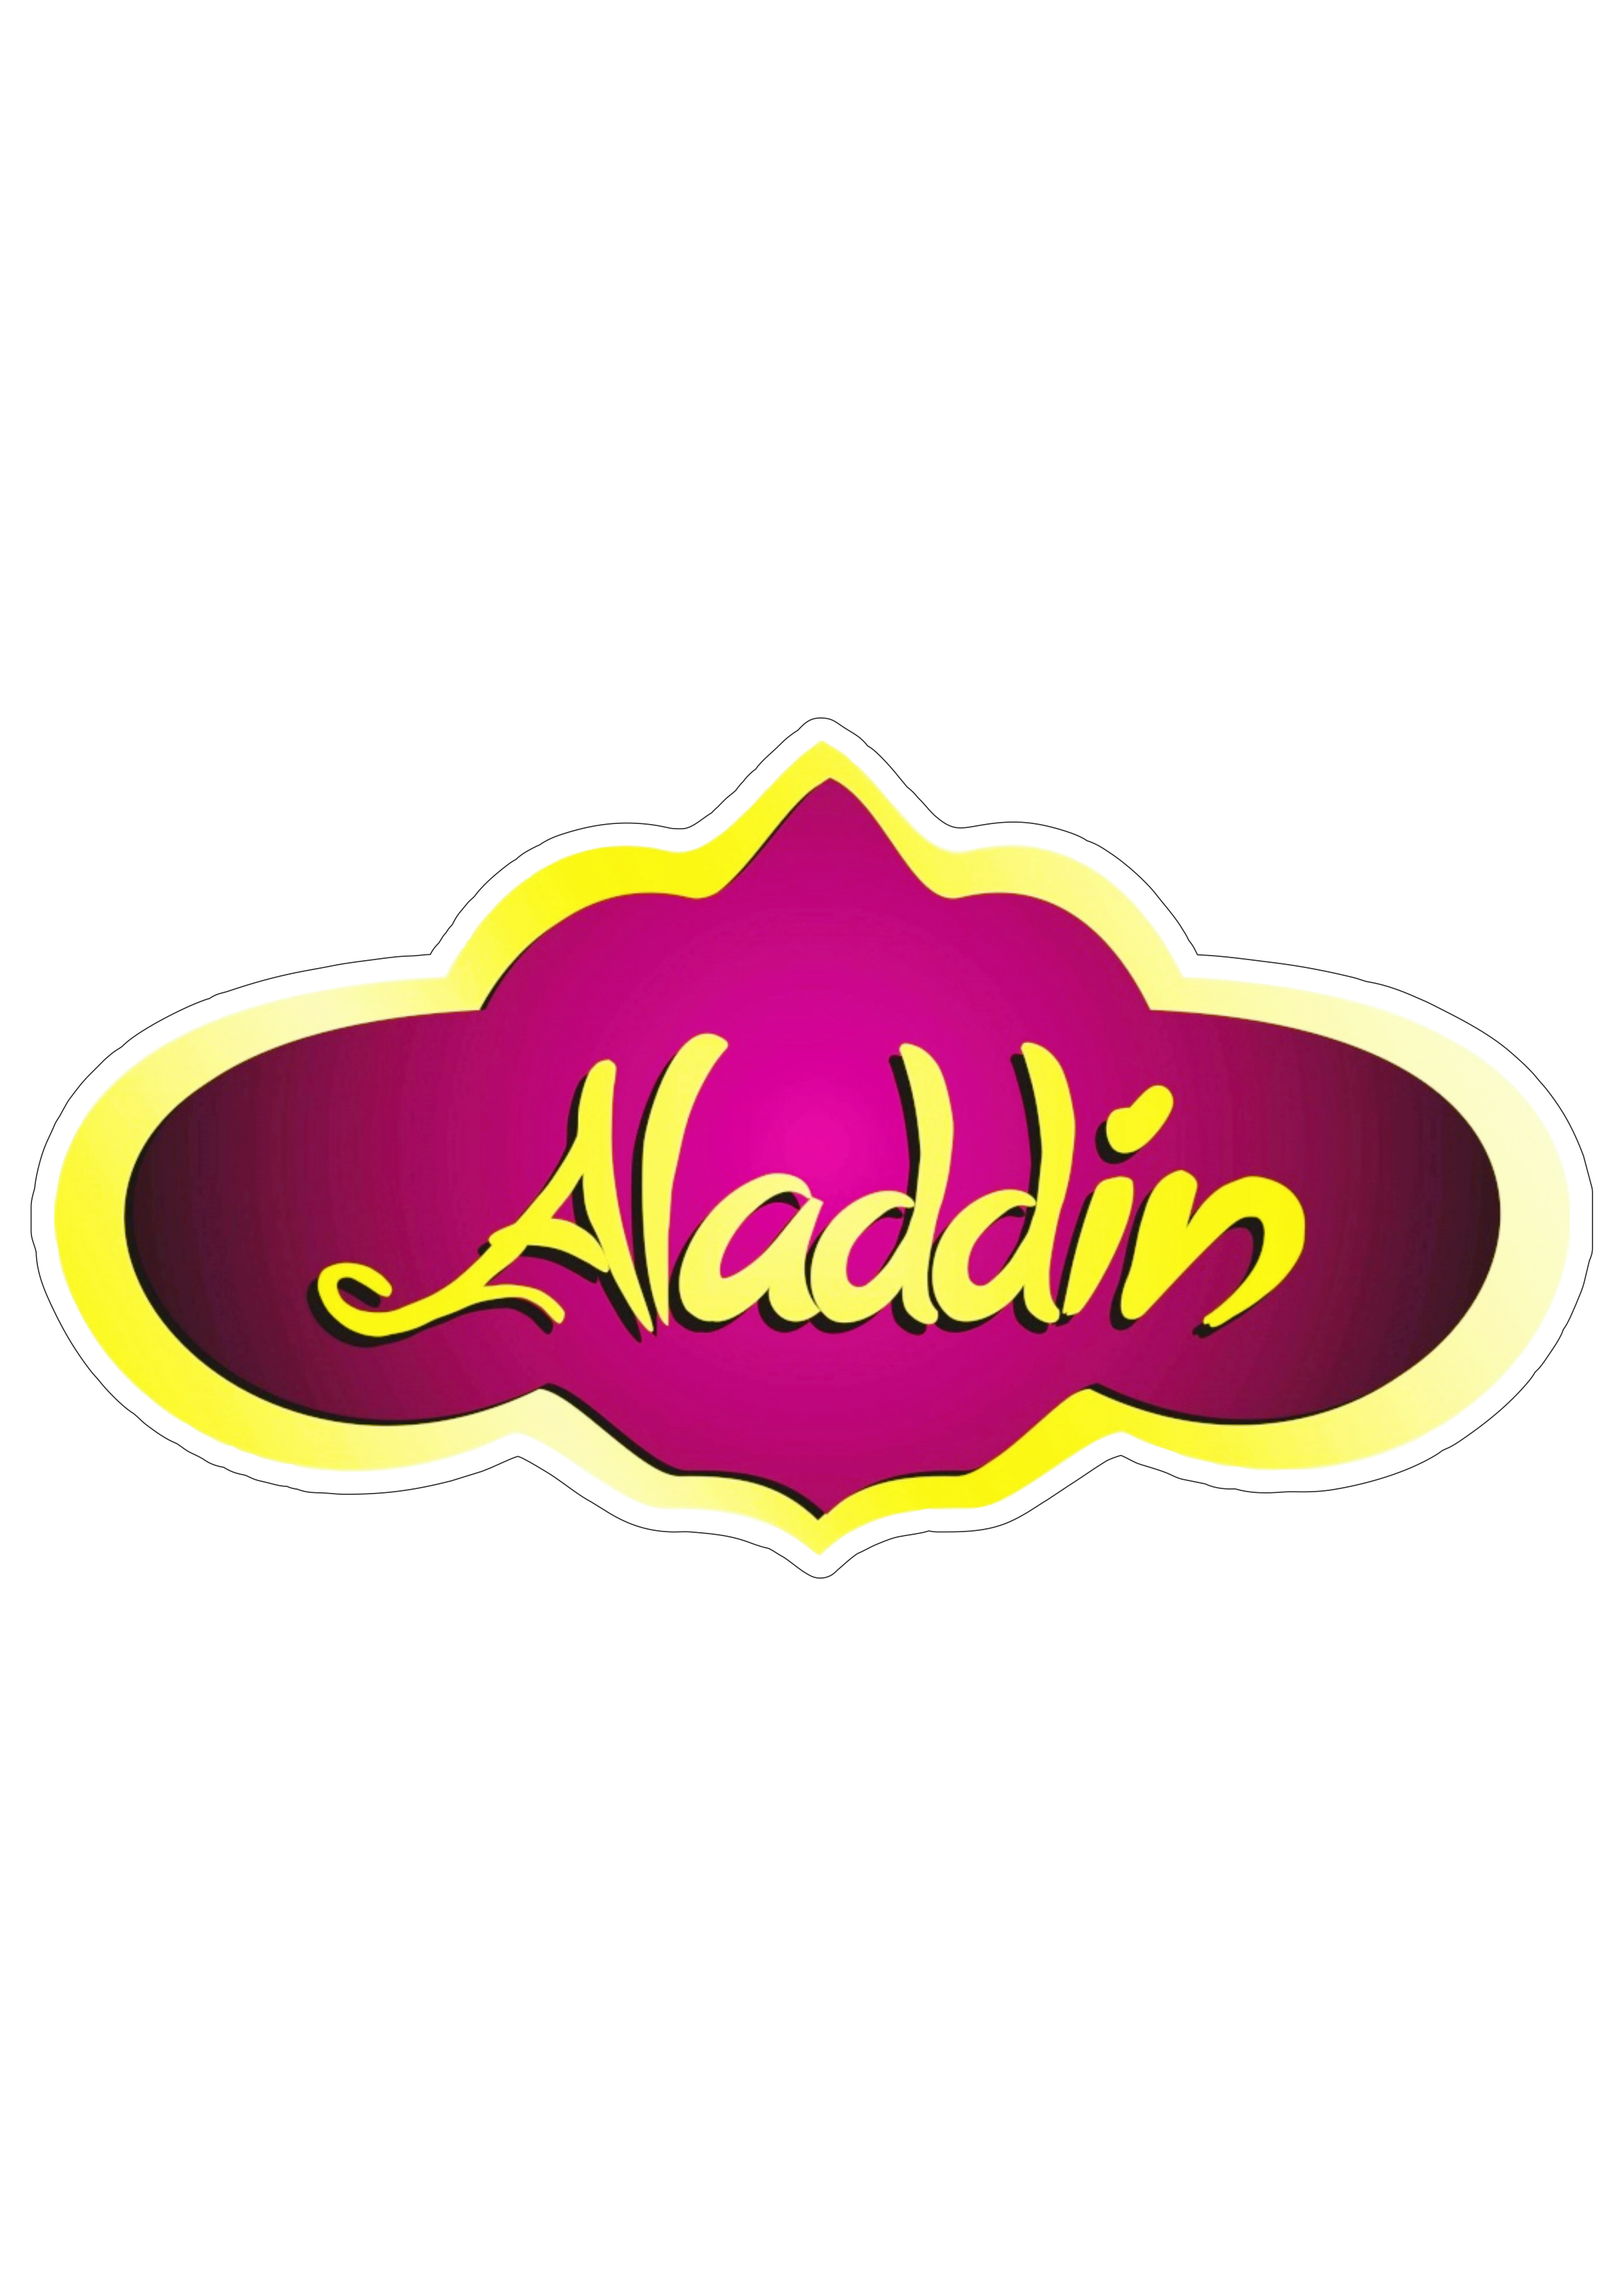 Aladdin logo Disney drawing transparent background png